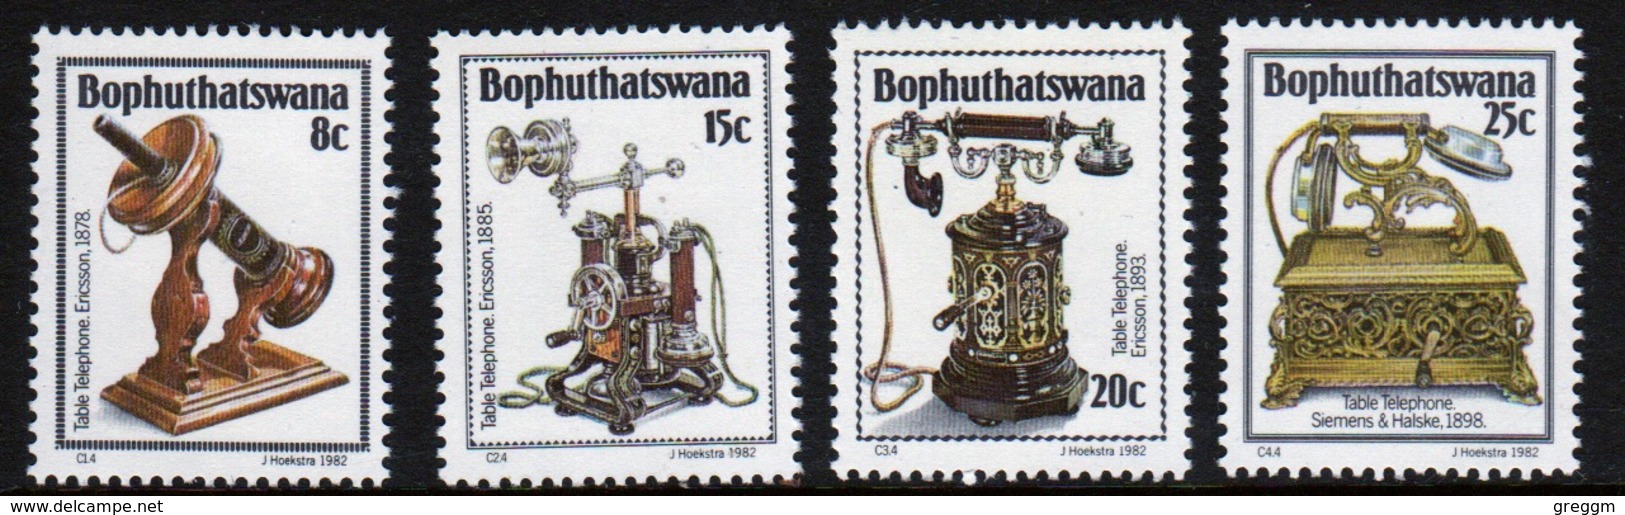 Bophuthatswana Set Of Stamps Celebrating History Of The Telephone (2nd Series) From 1982. - Bophuthatswana